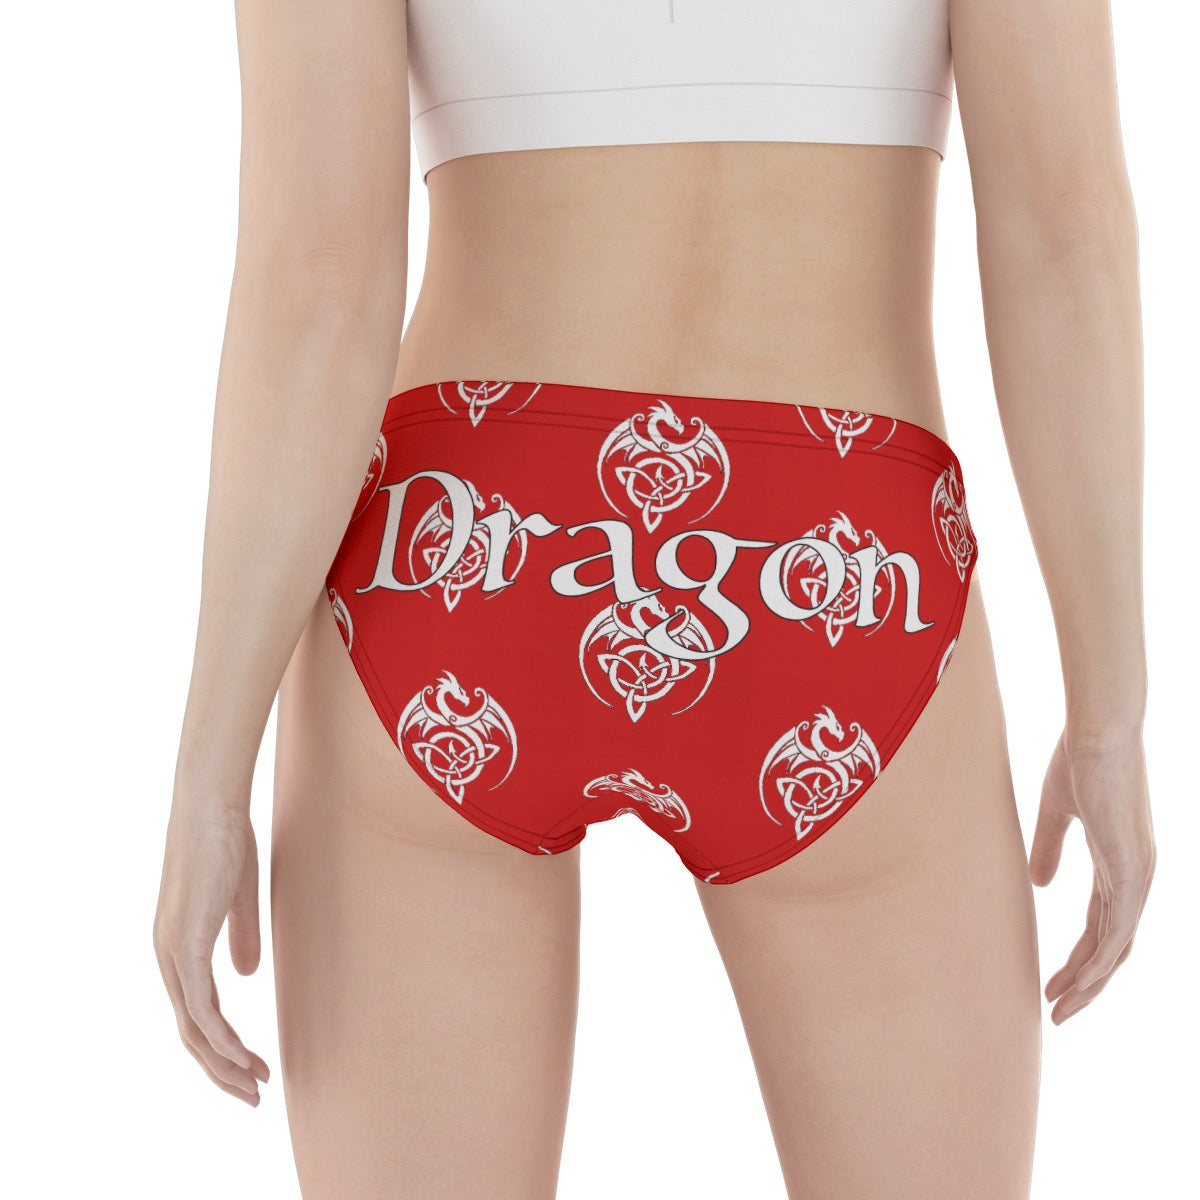 Patti's Power Panties Women's Hipster Bikini Briefs - "Dragon"